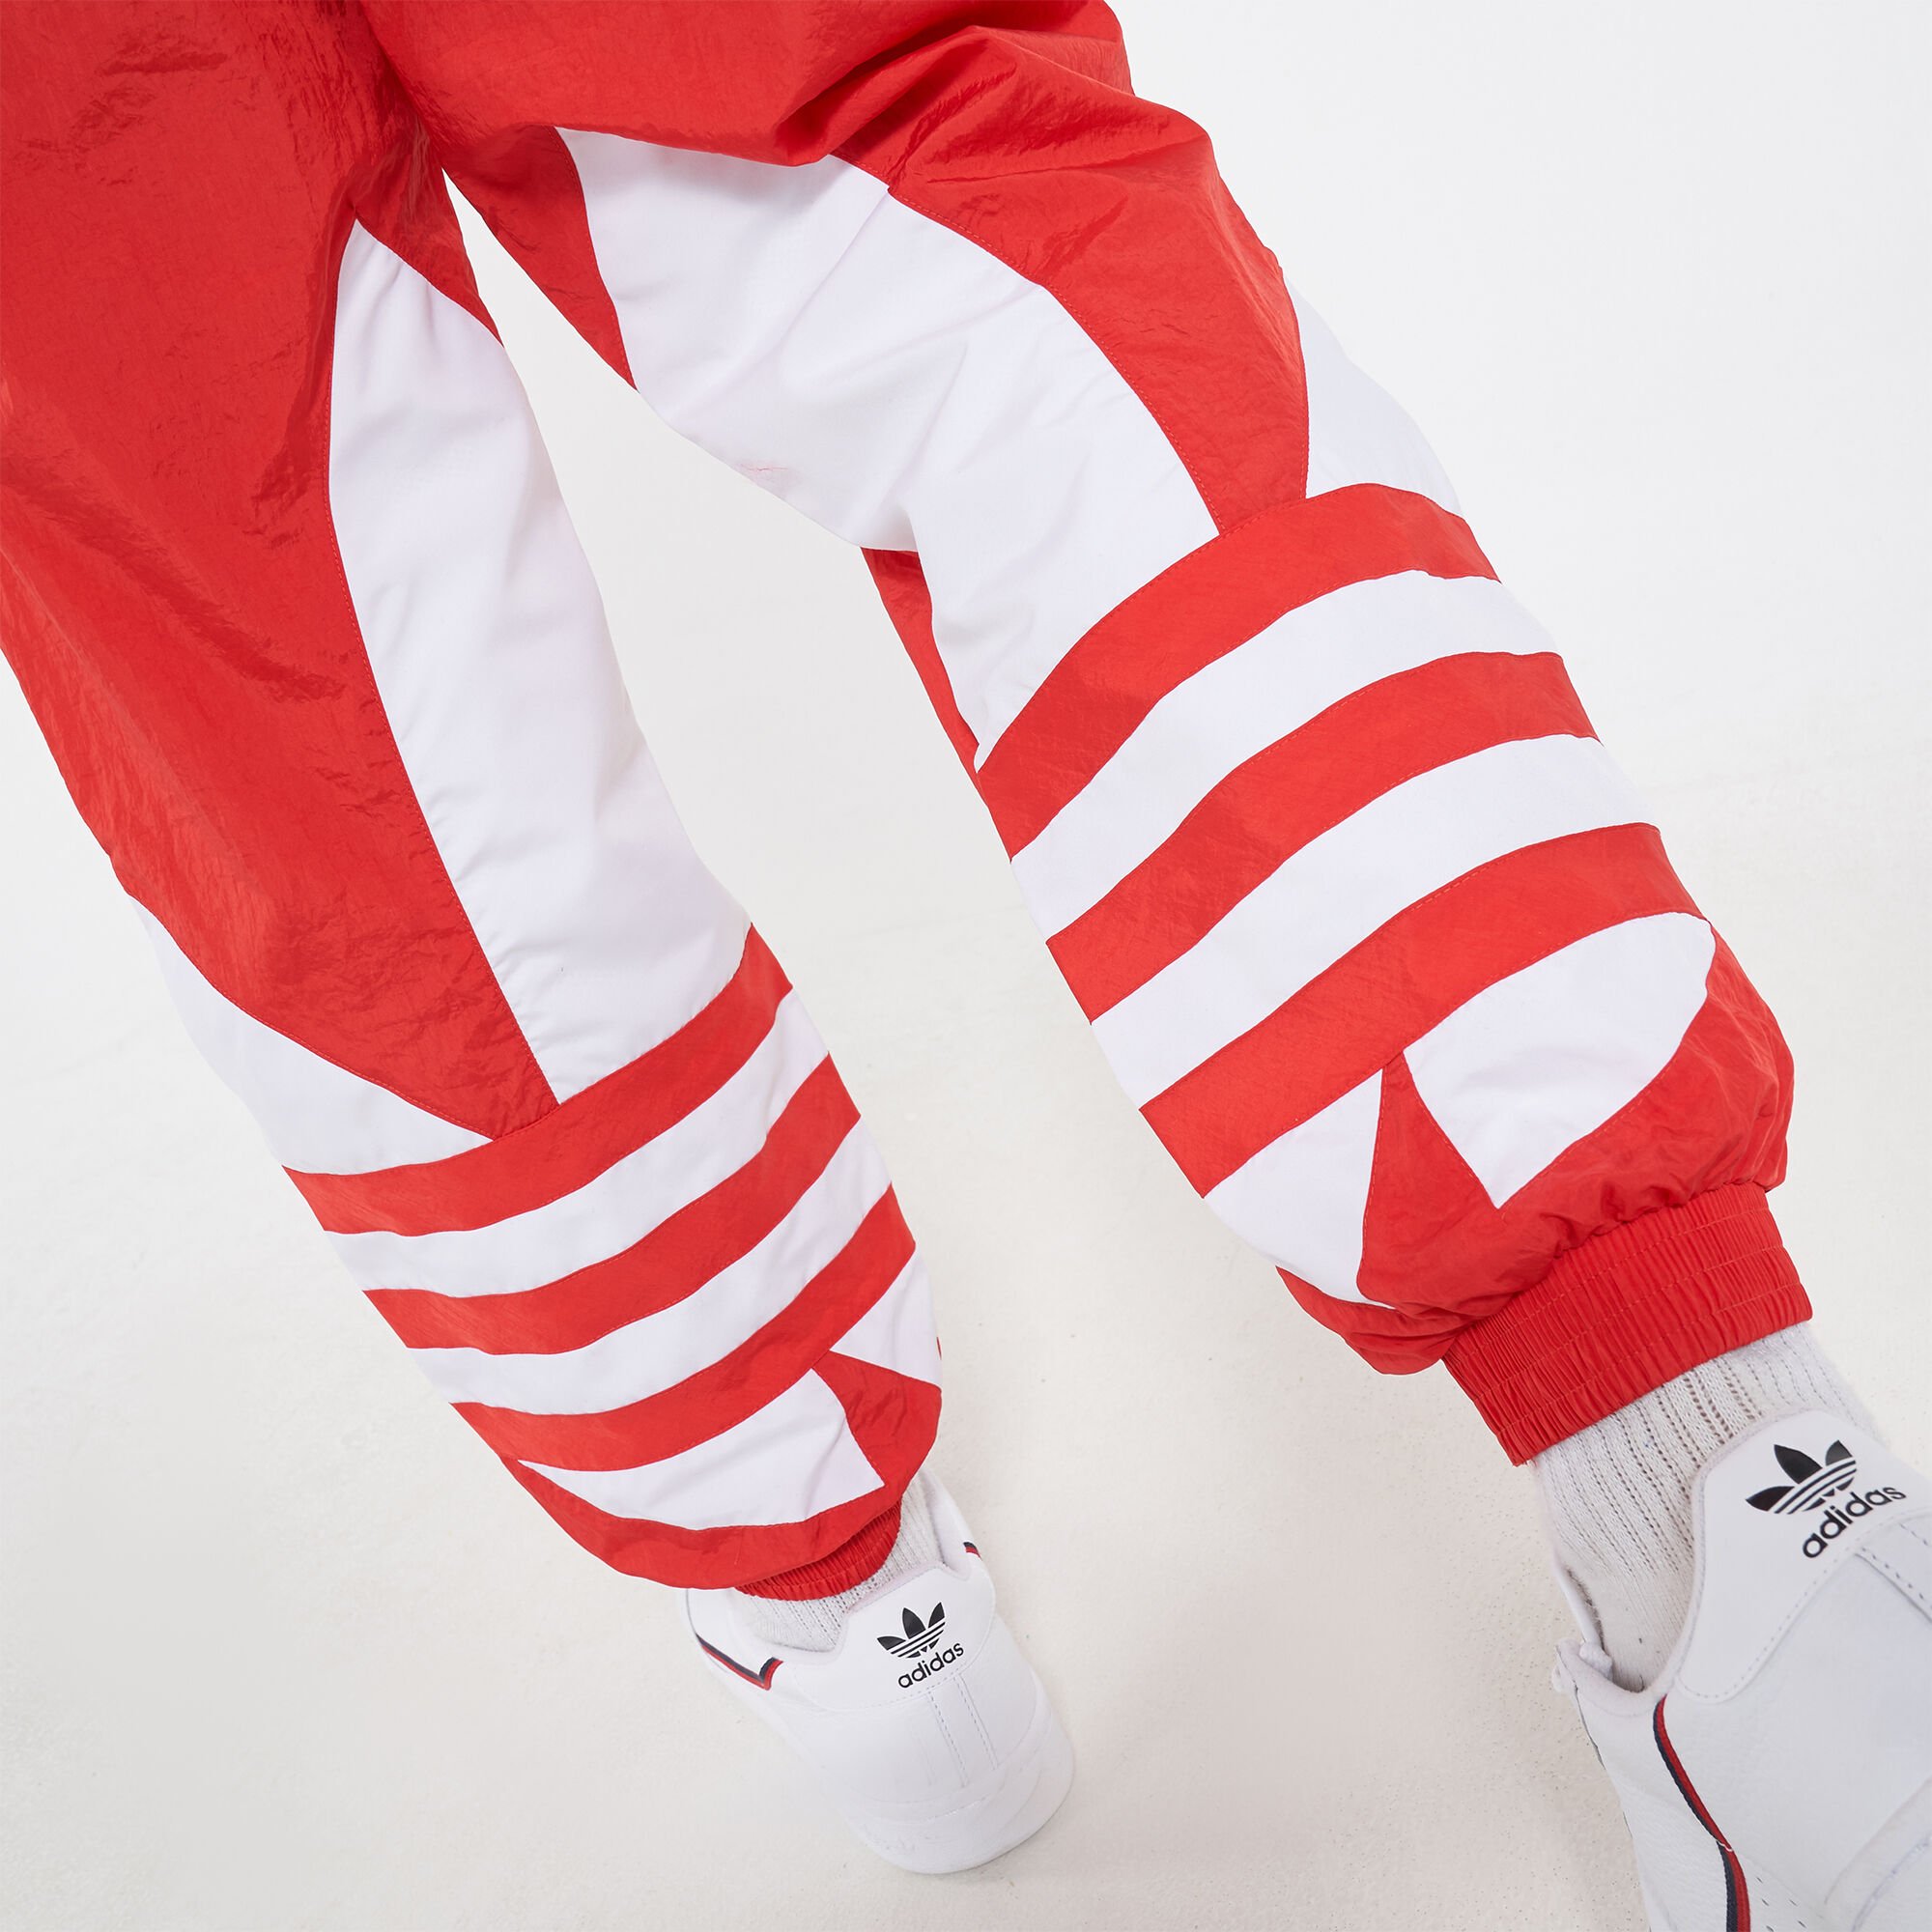 Adidas Big Trefoil Pants Mens Fashion Bottoms Joggers on Carousell